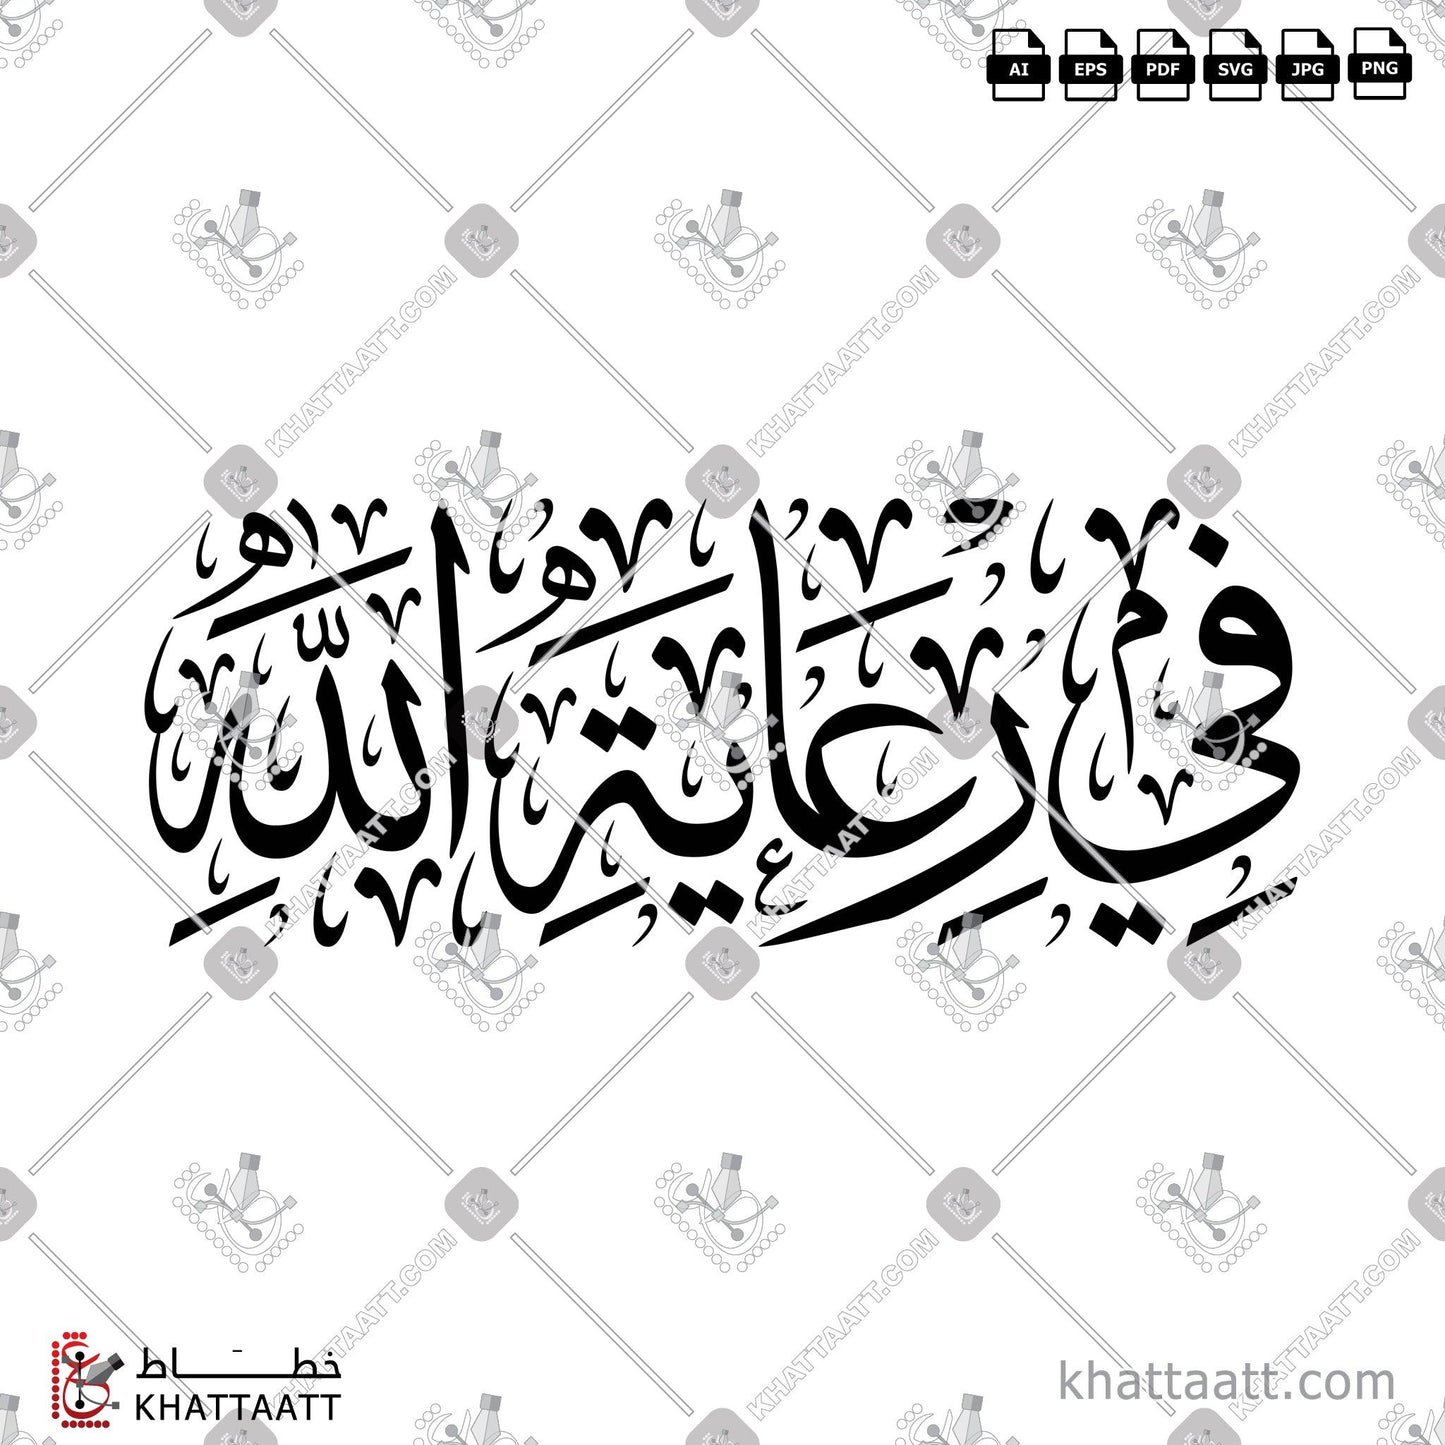 Arabic Calligraphy Vector, Greetings, Thuluth Script, الخط العربي, تهنئات ومعايدات, خط الثلث, في رعاية الله KHATTAATT